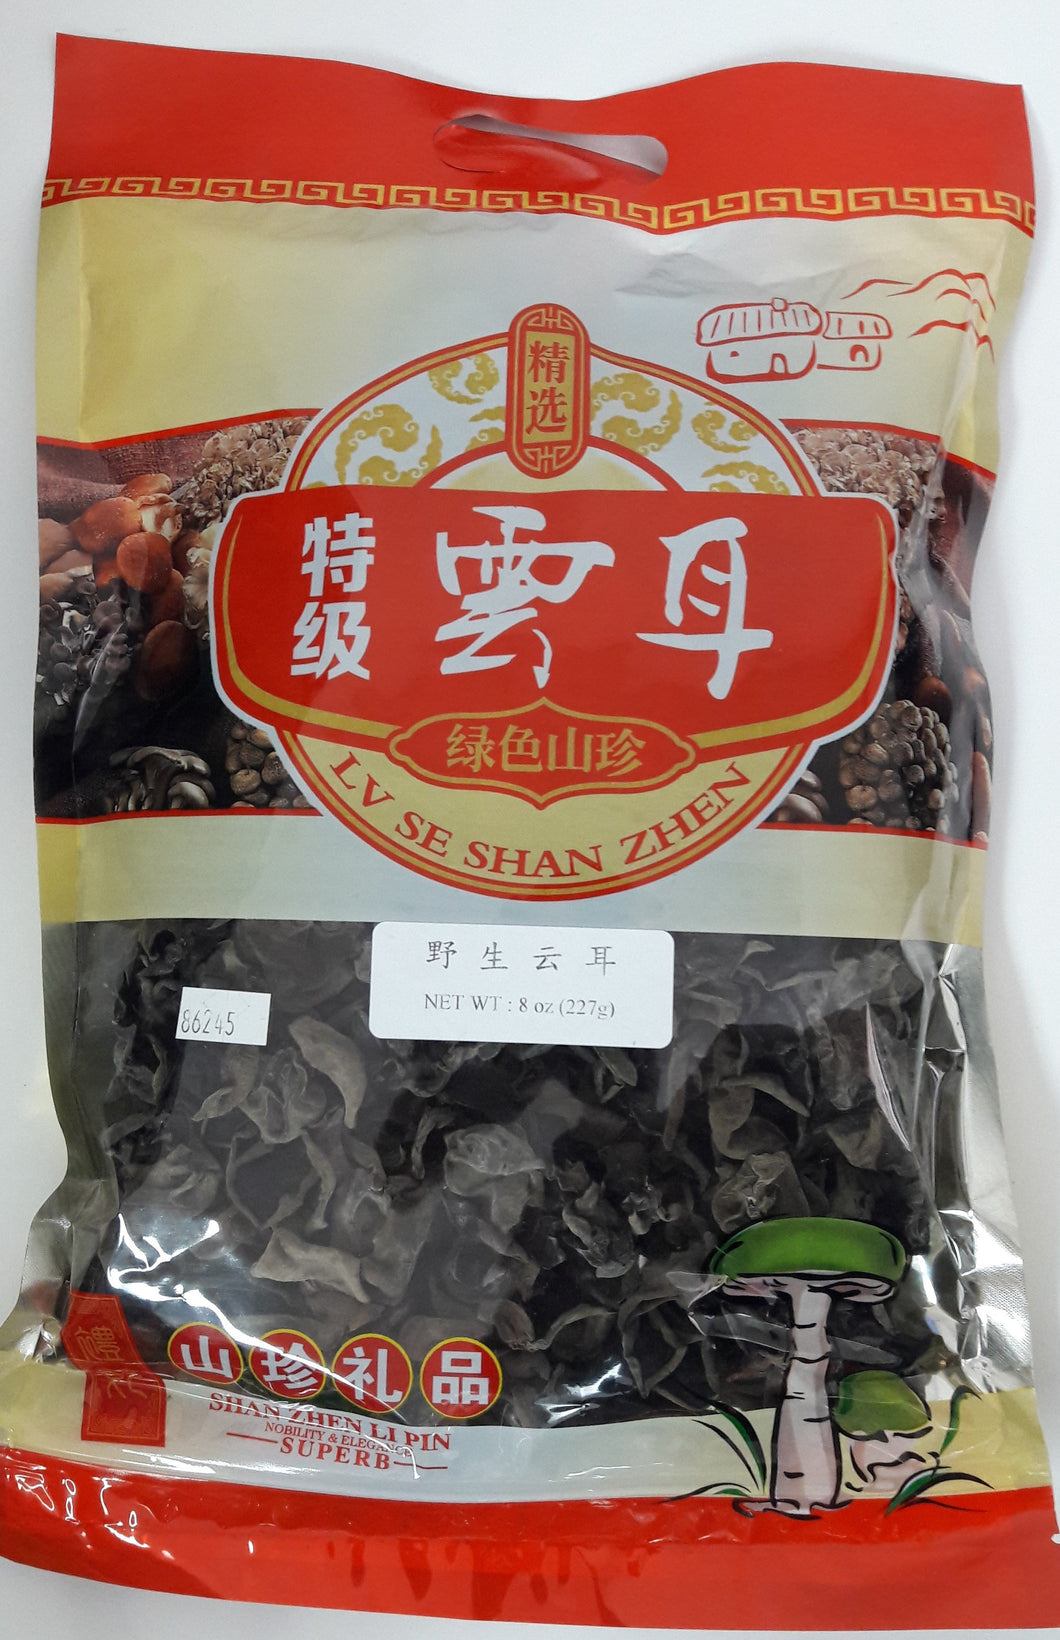 野生雲耳 LvSe Shan Zhen - Premium Black Fungus  #86245-8